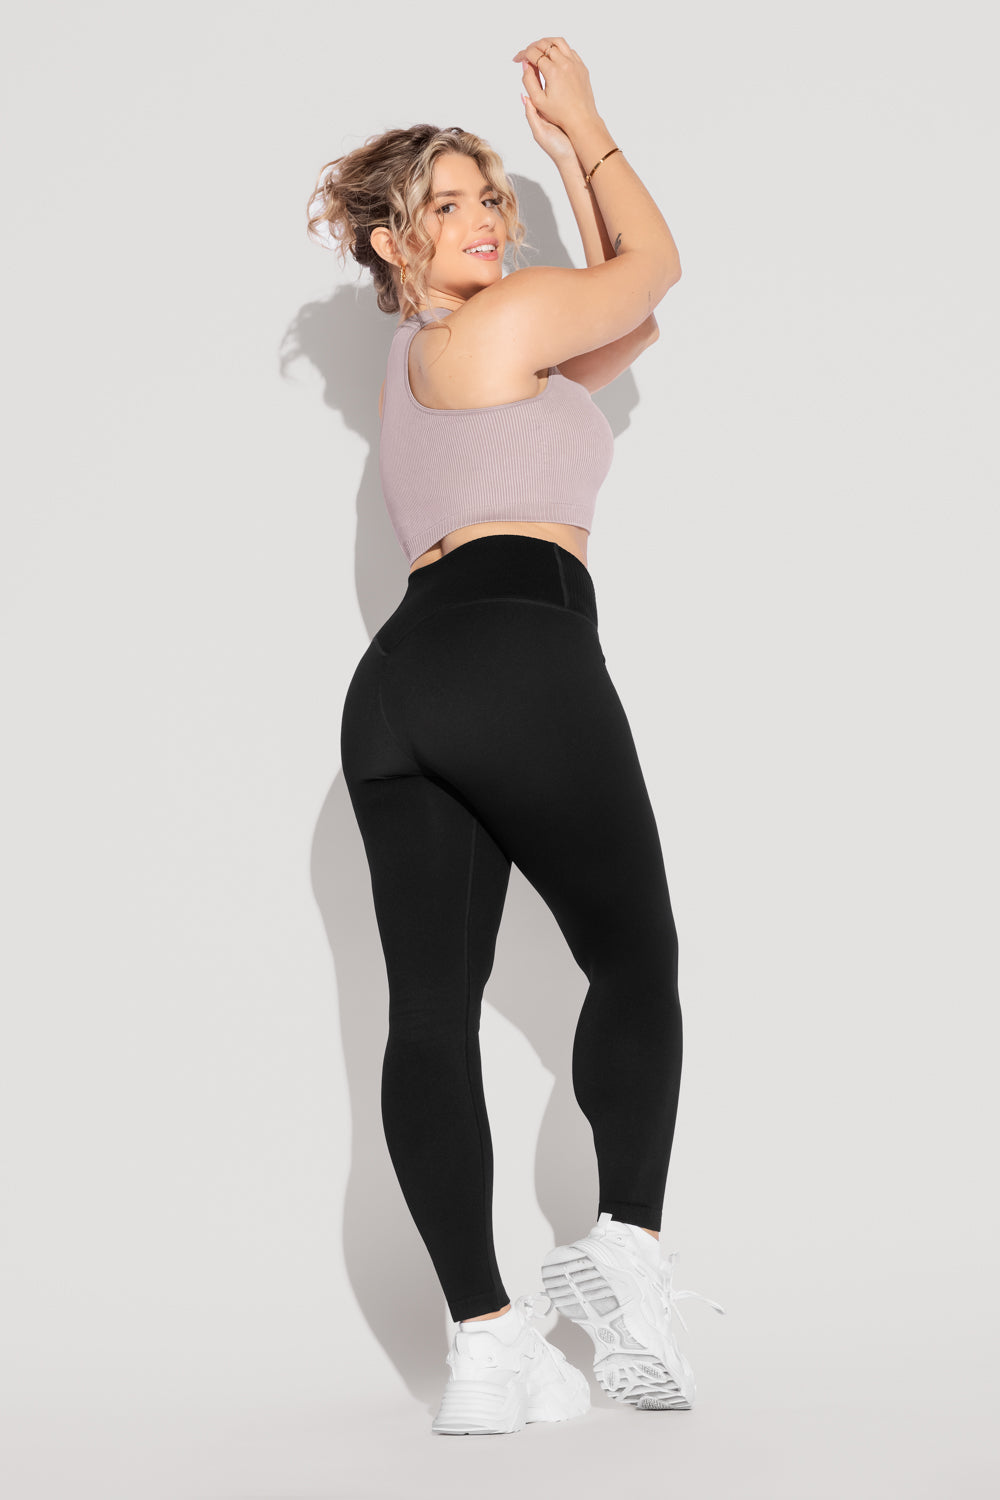 Womens Sportswear: Capri Crossover Leggings For Dancing, Fitness, Gym, Yoga  201014 From Xue04, $14.73 | DHgate.Com